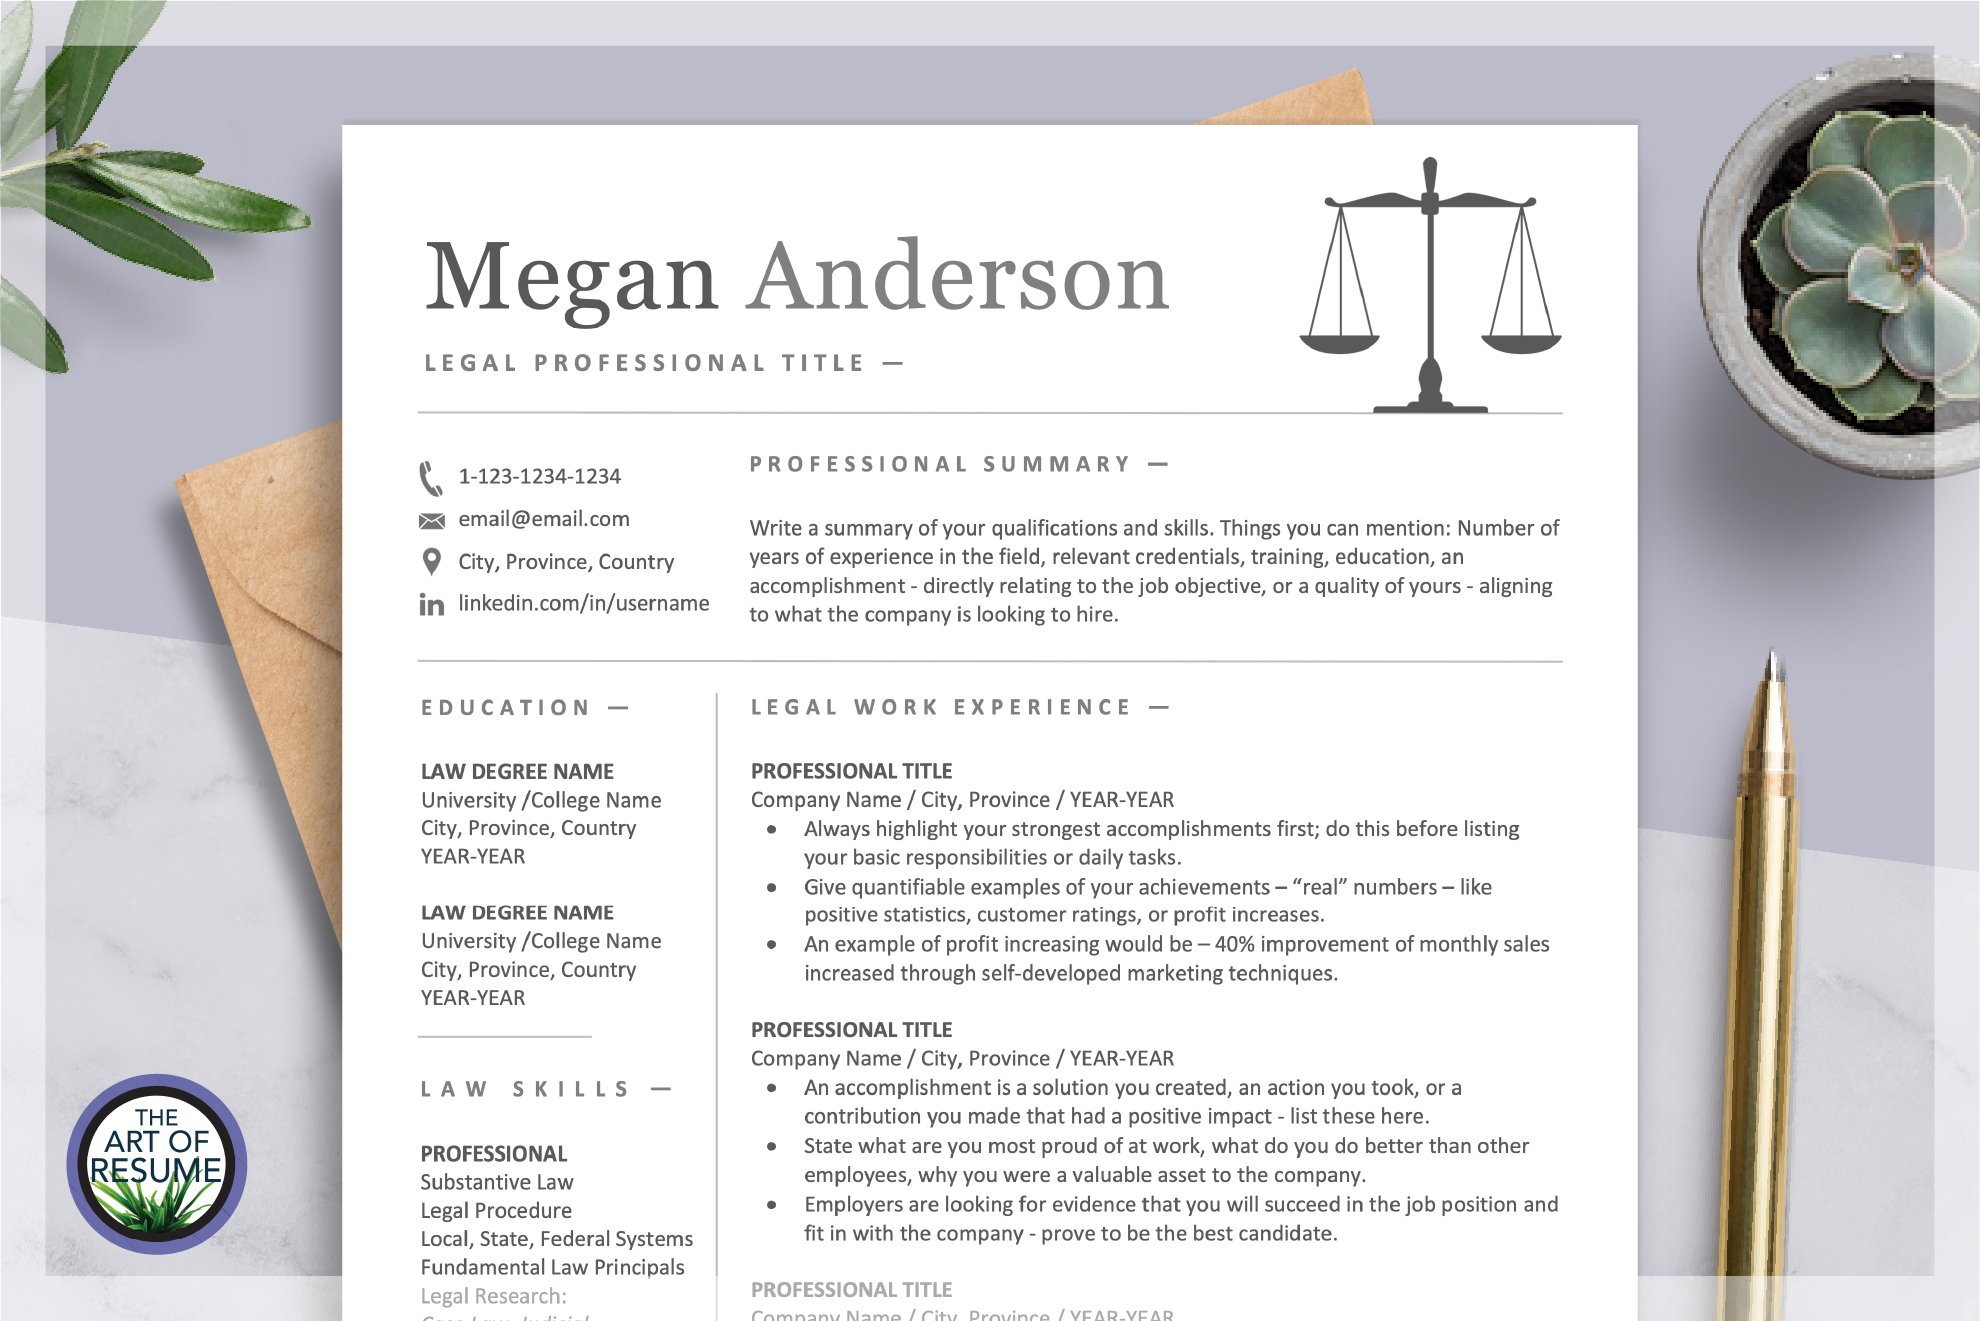 Legal Resume | Lawyer, Law Clerk CV cover image.